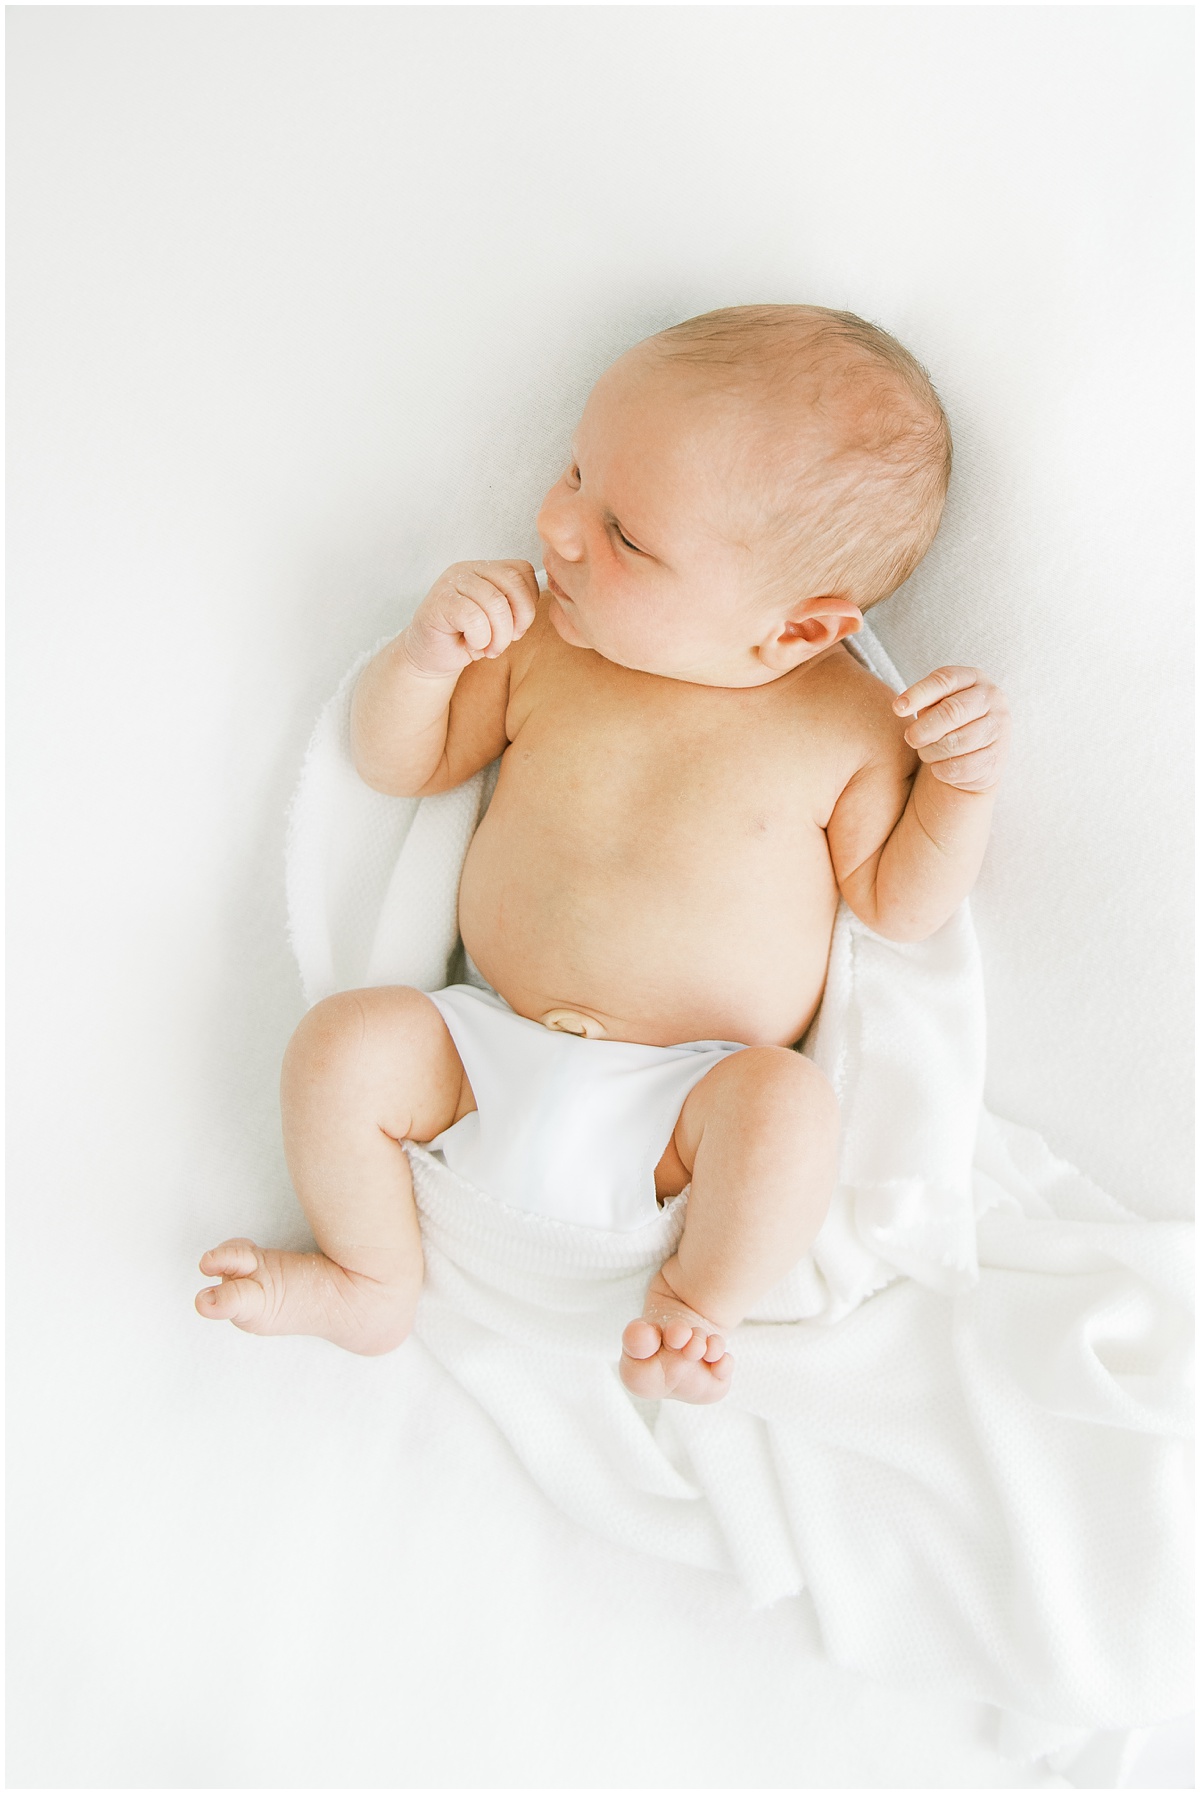 Greenville studio newborn photography